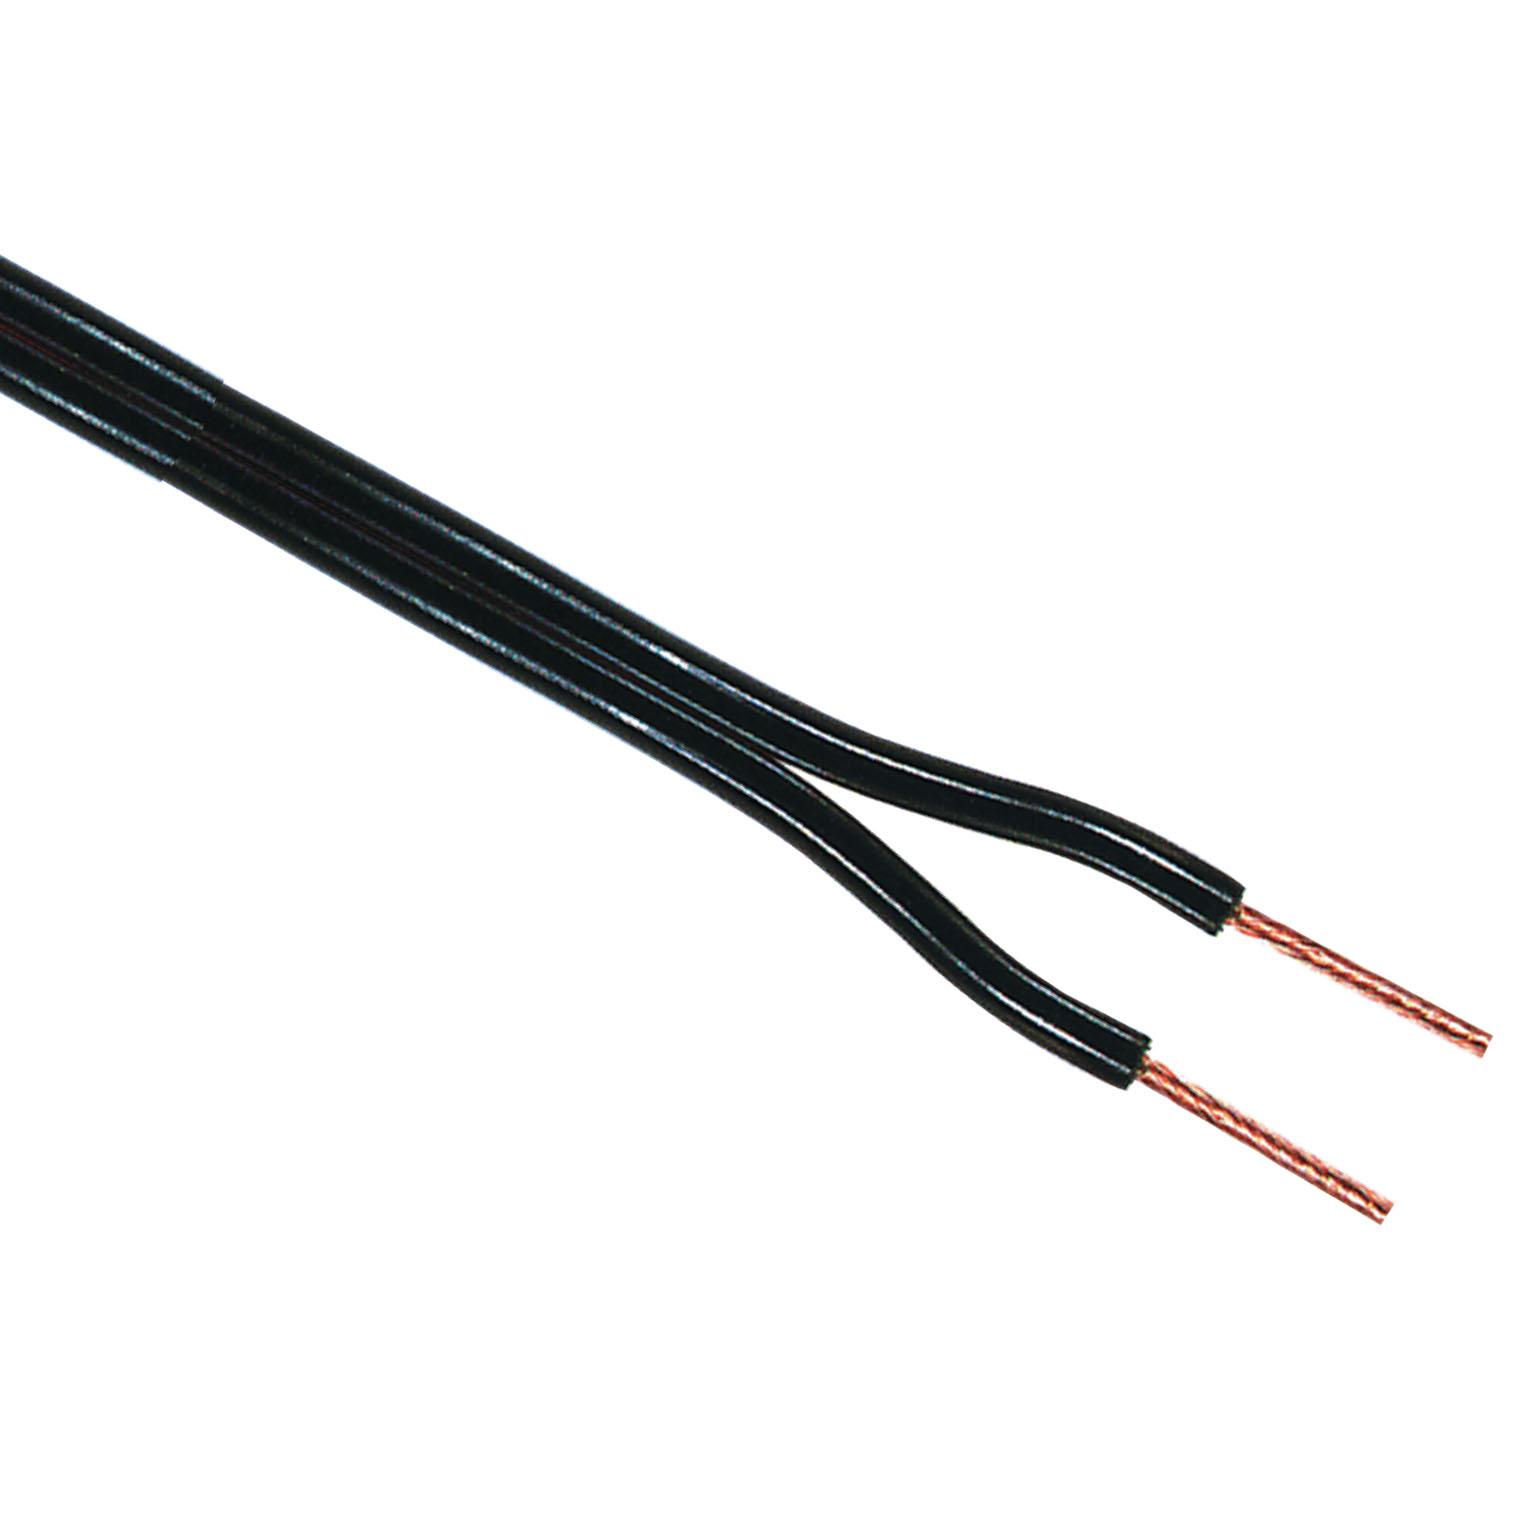 Luidspreker kabel - per meter - 2.5 mm² - Techtube Pro